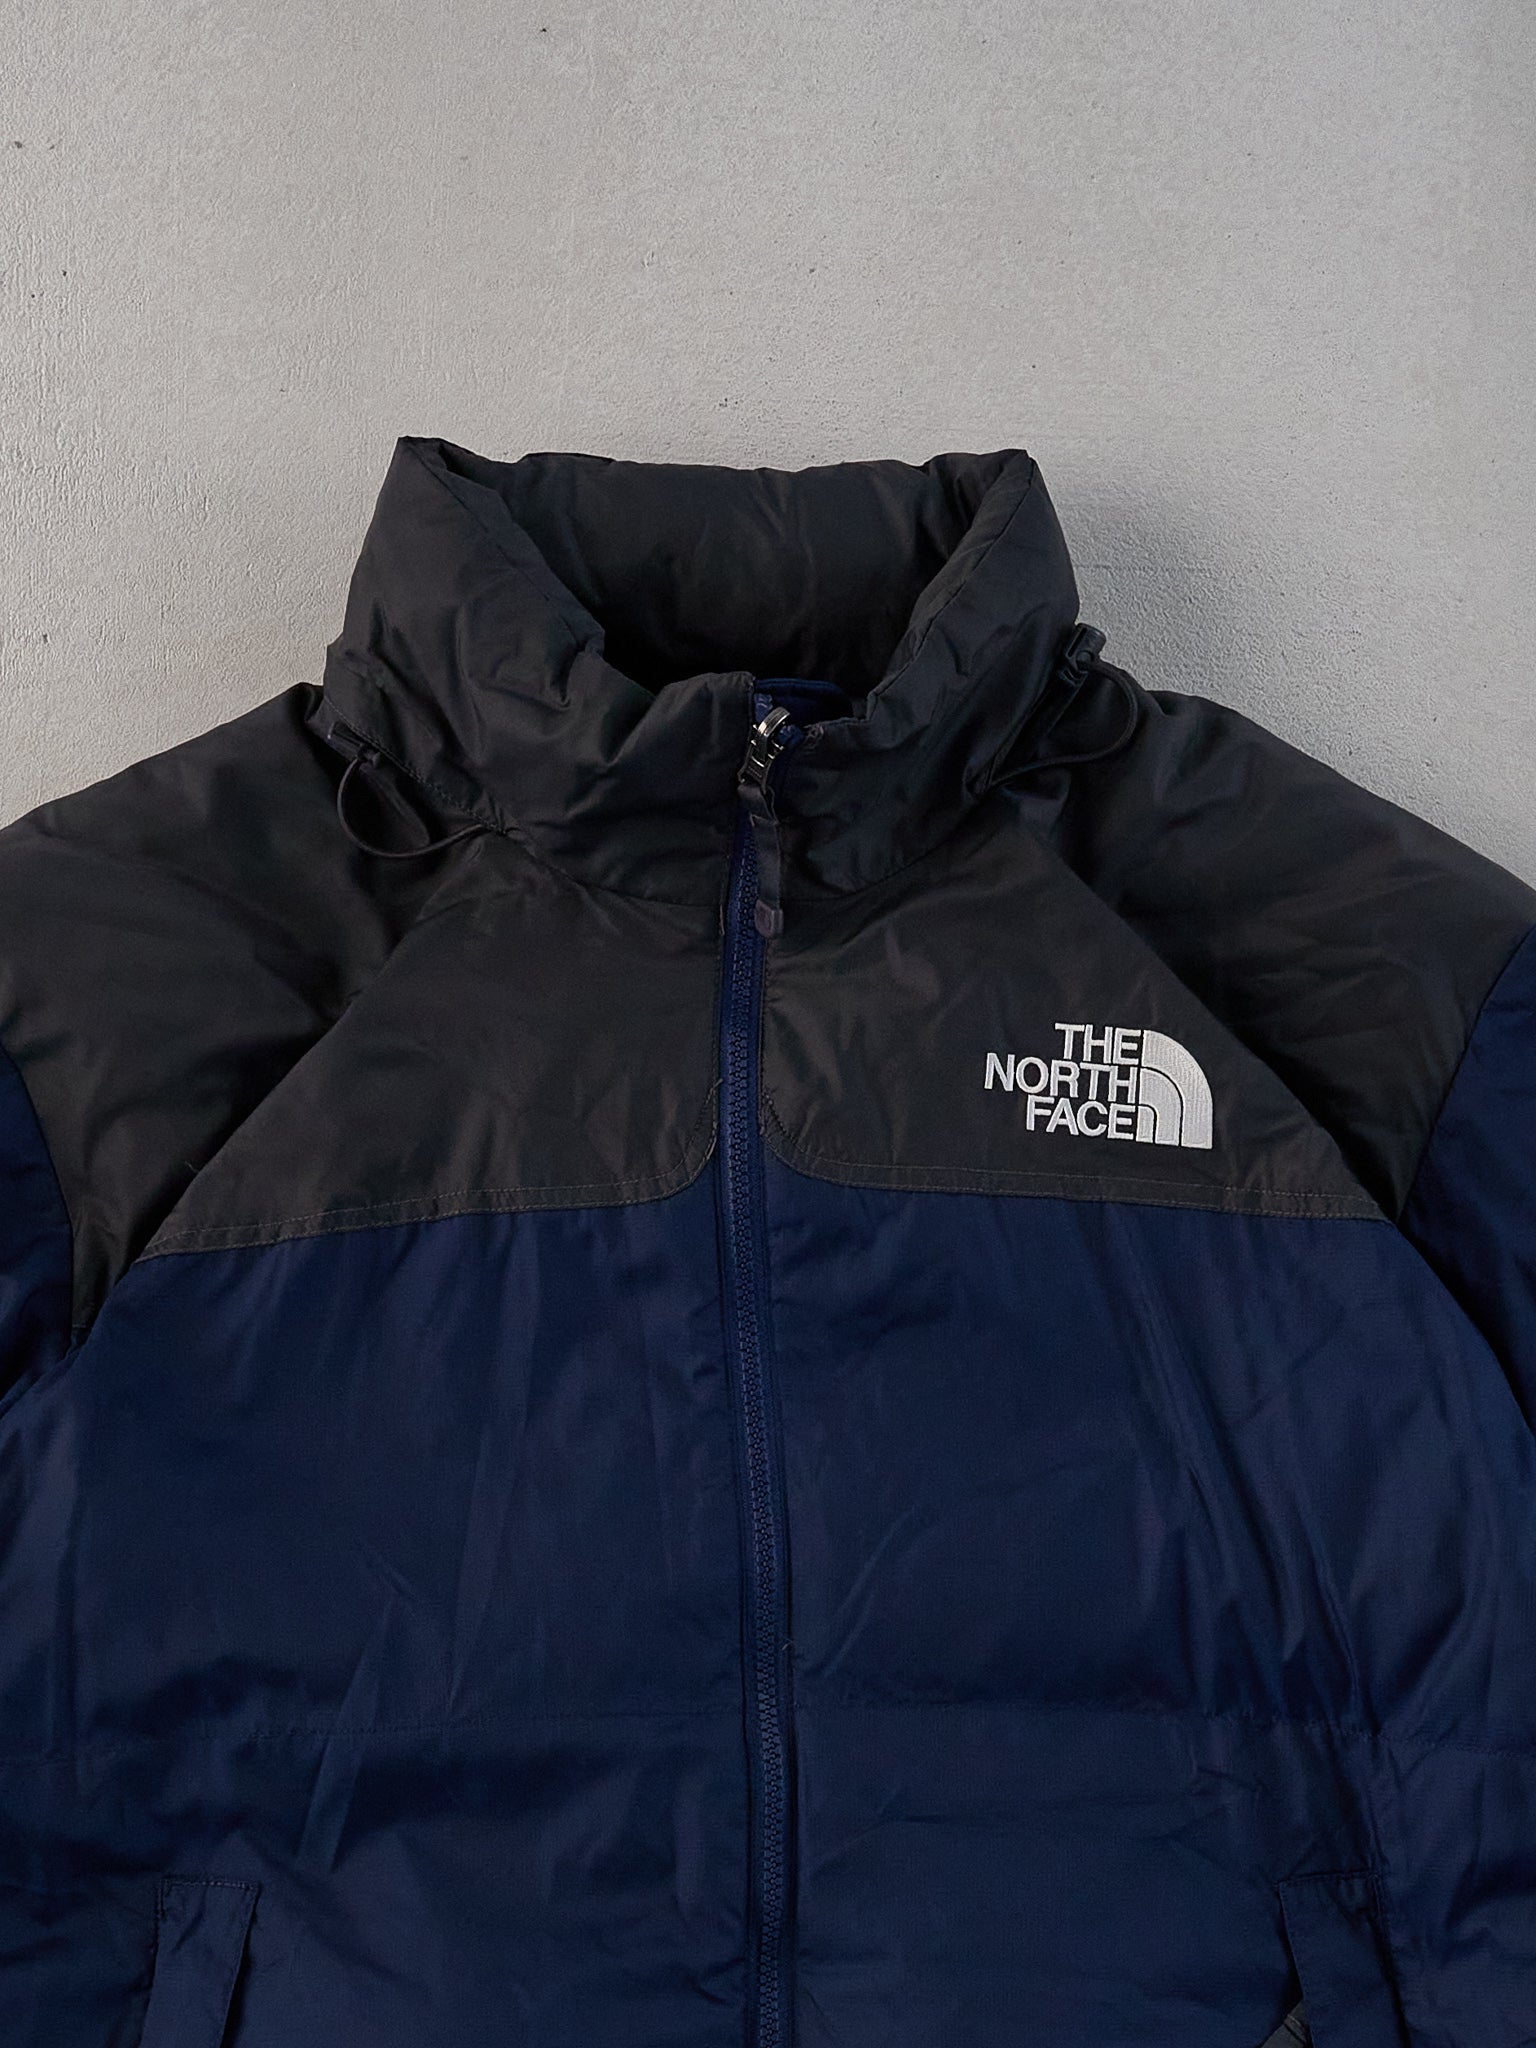 Vintage 90s Navy Blue and Black Northface Nuptse Winter Jacket (L)